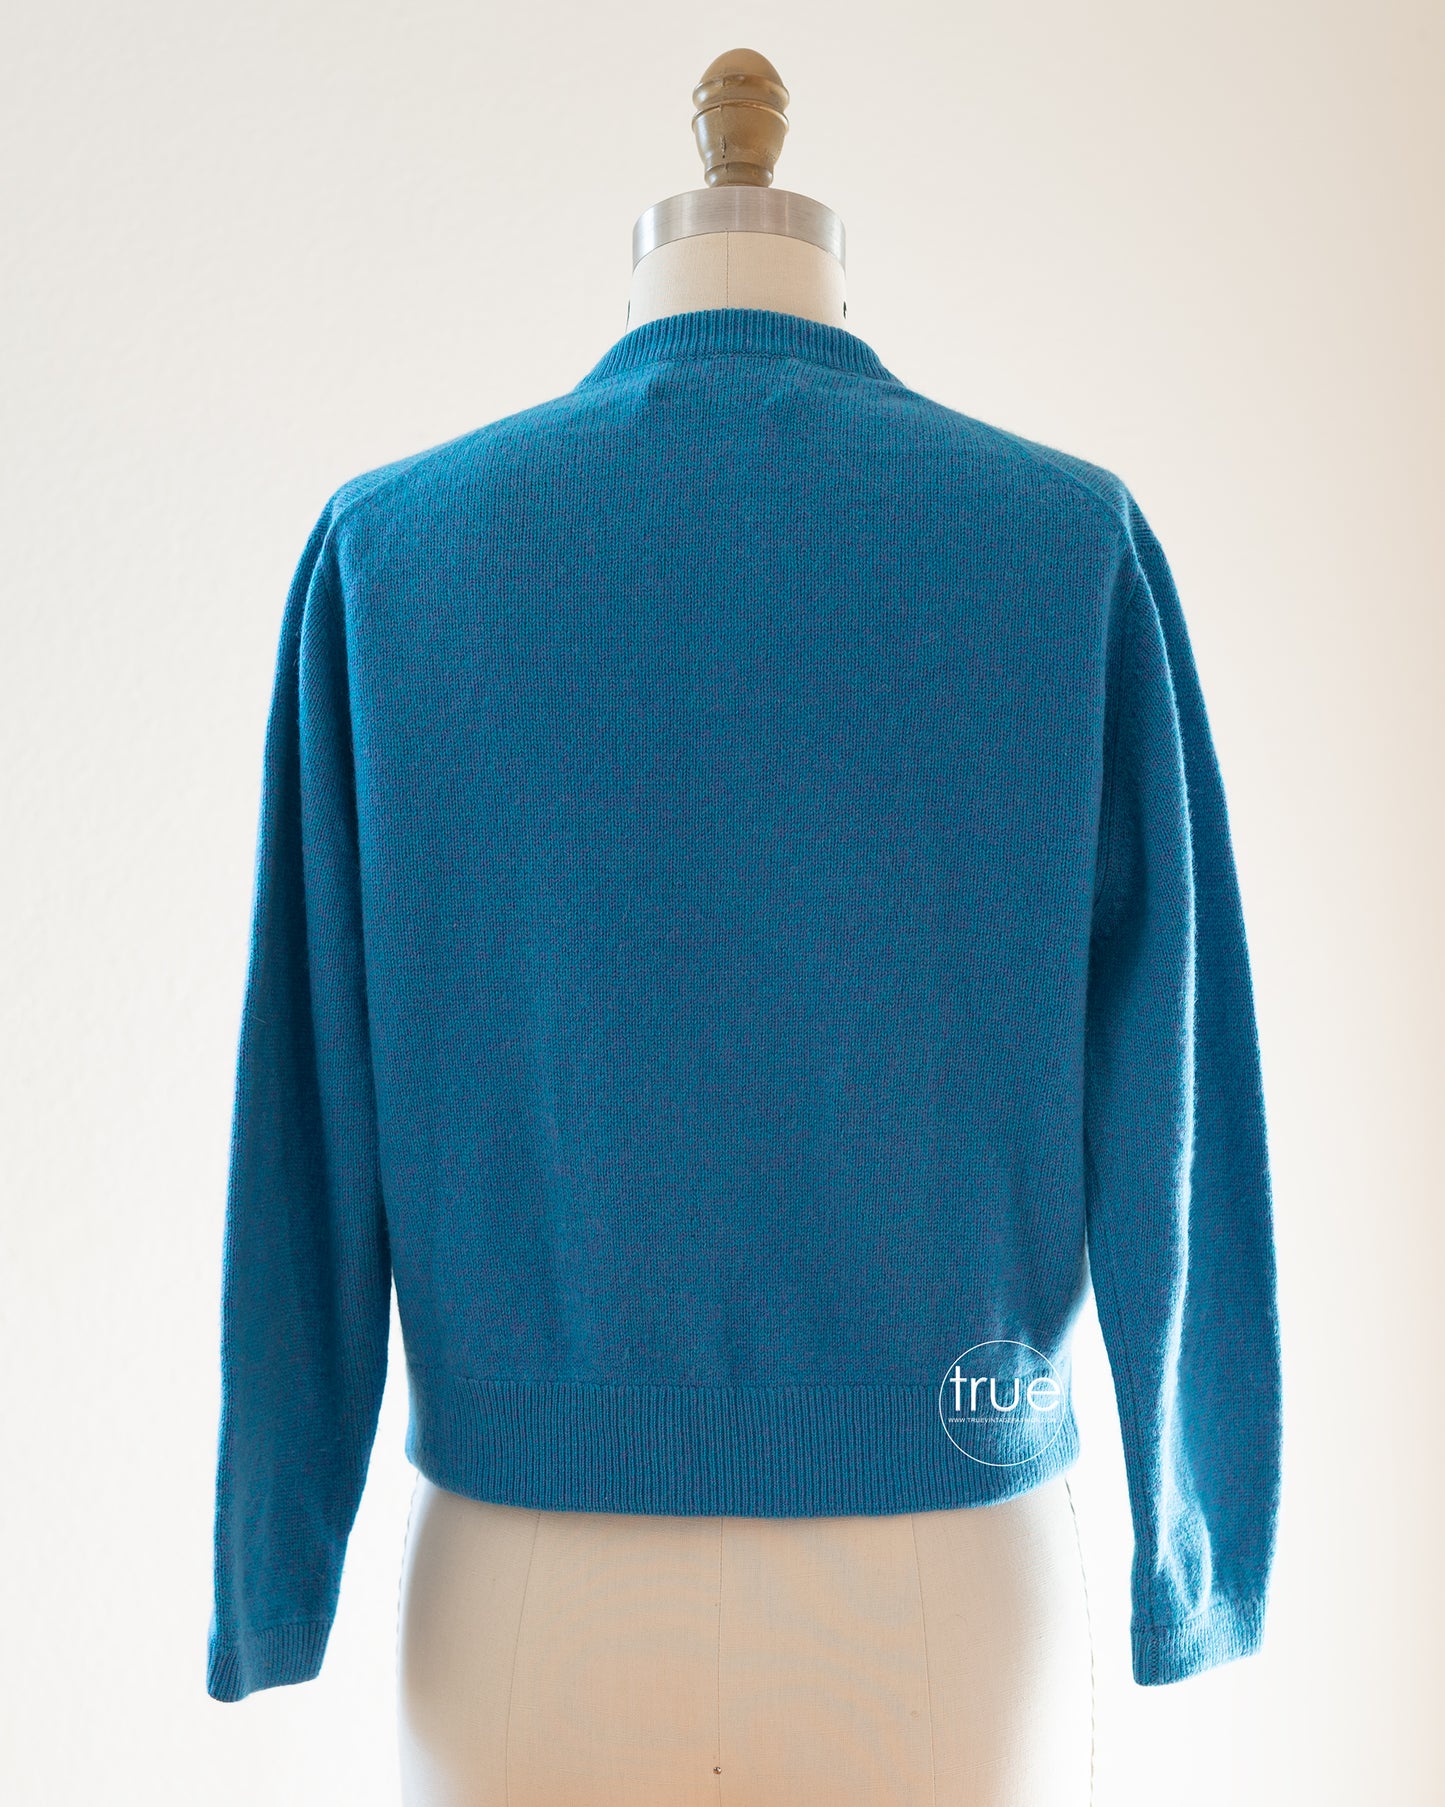 vintage 1950's sweater ...gorgeous BALLANTYNE cashmere cardigan w/ floral bouquet buttons